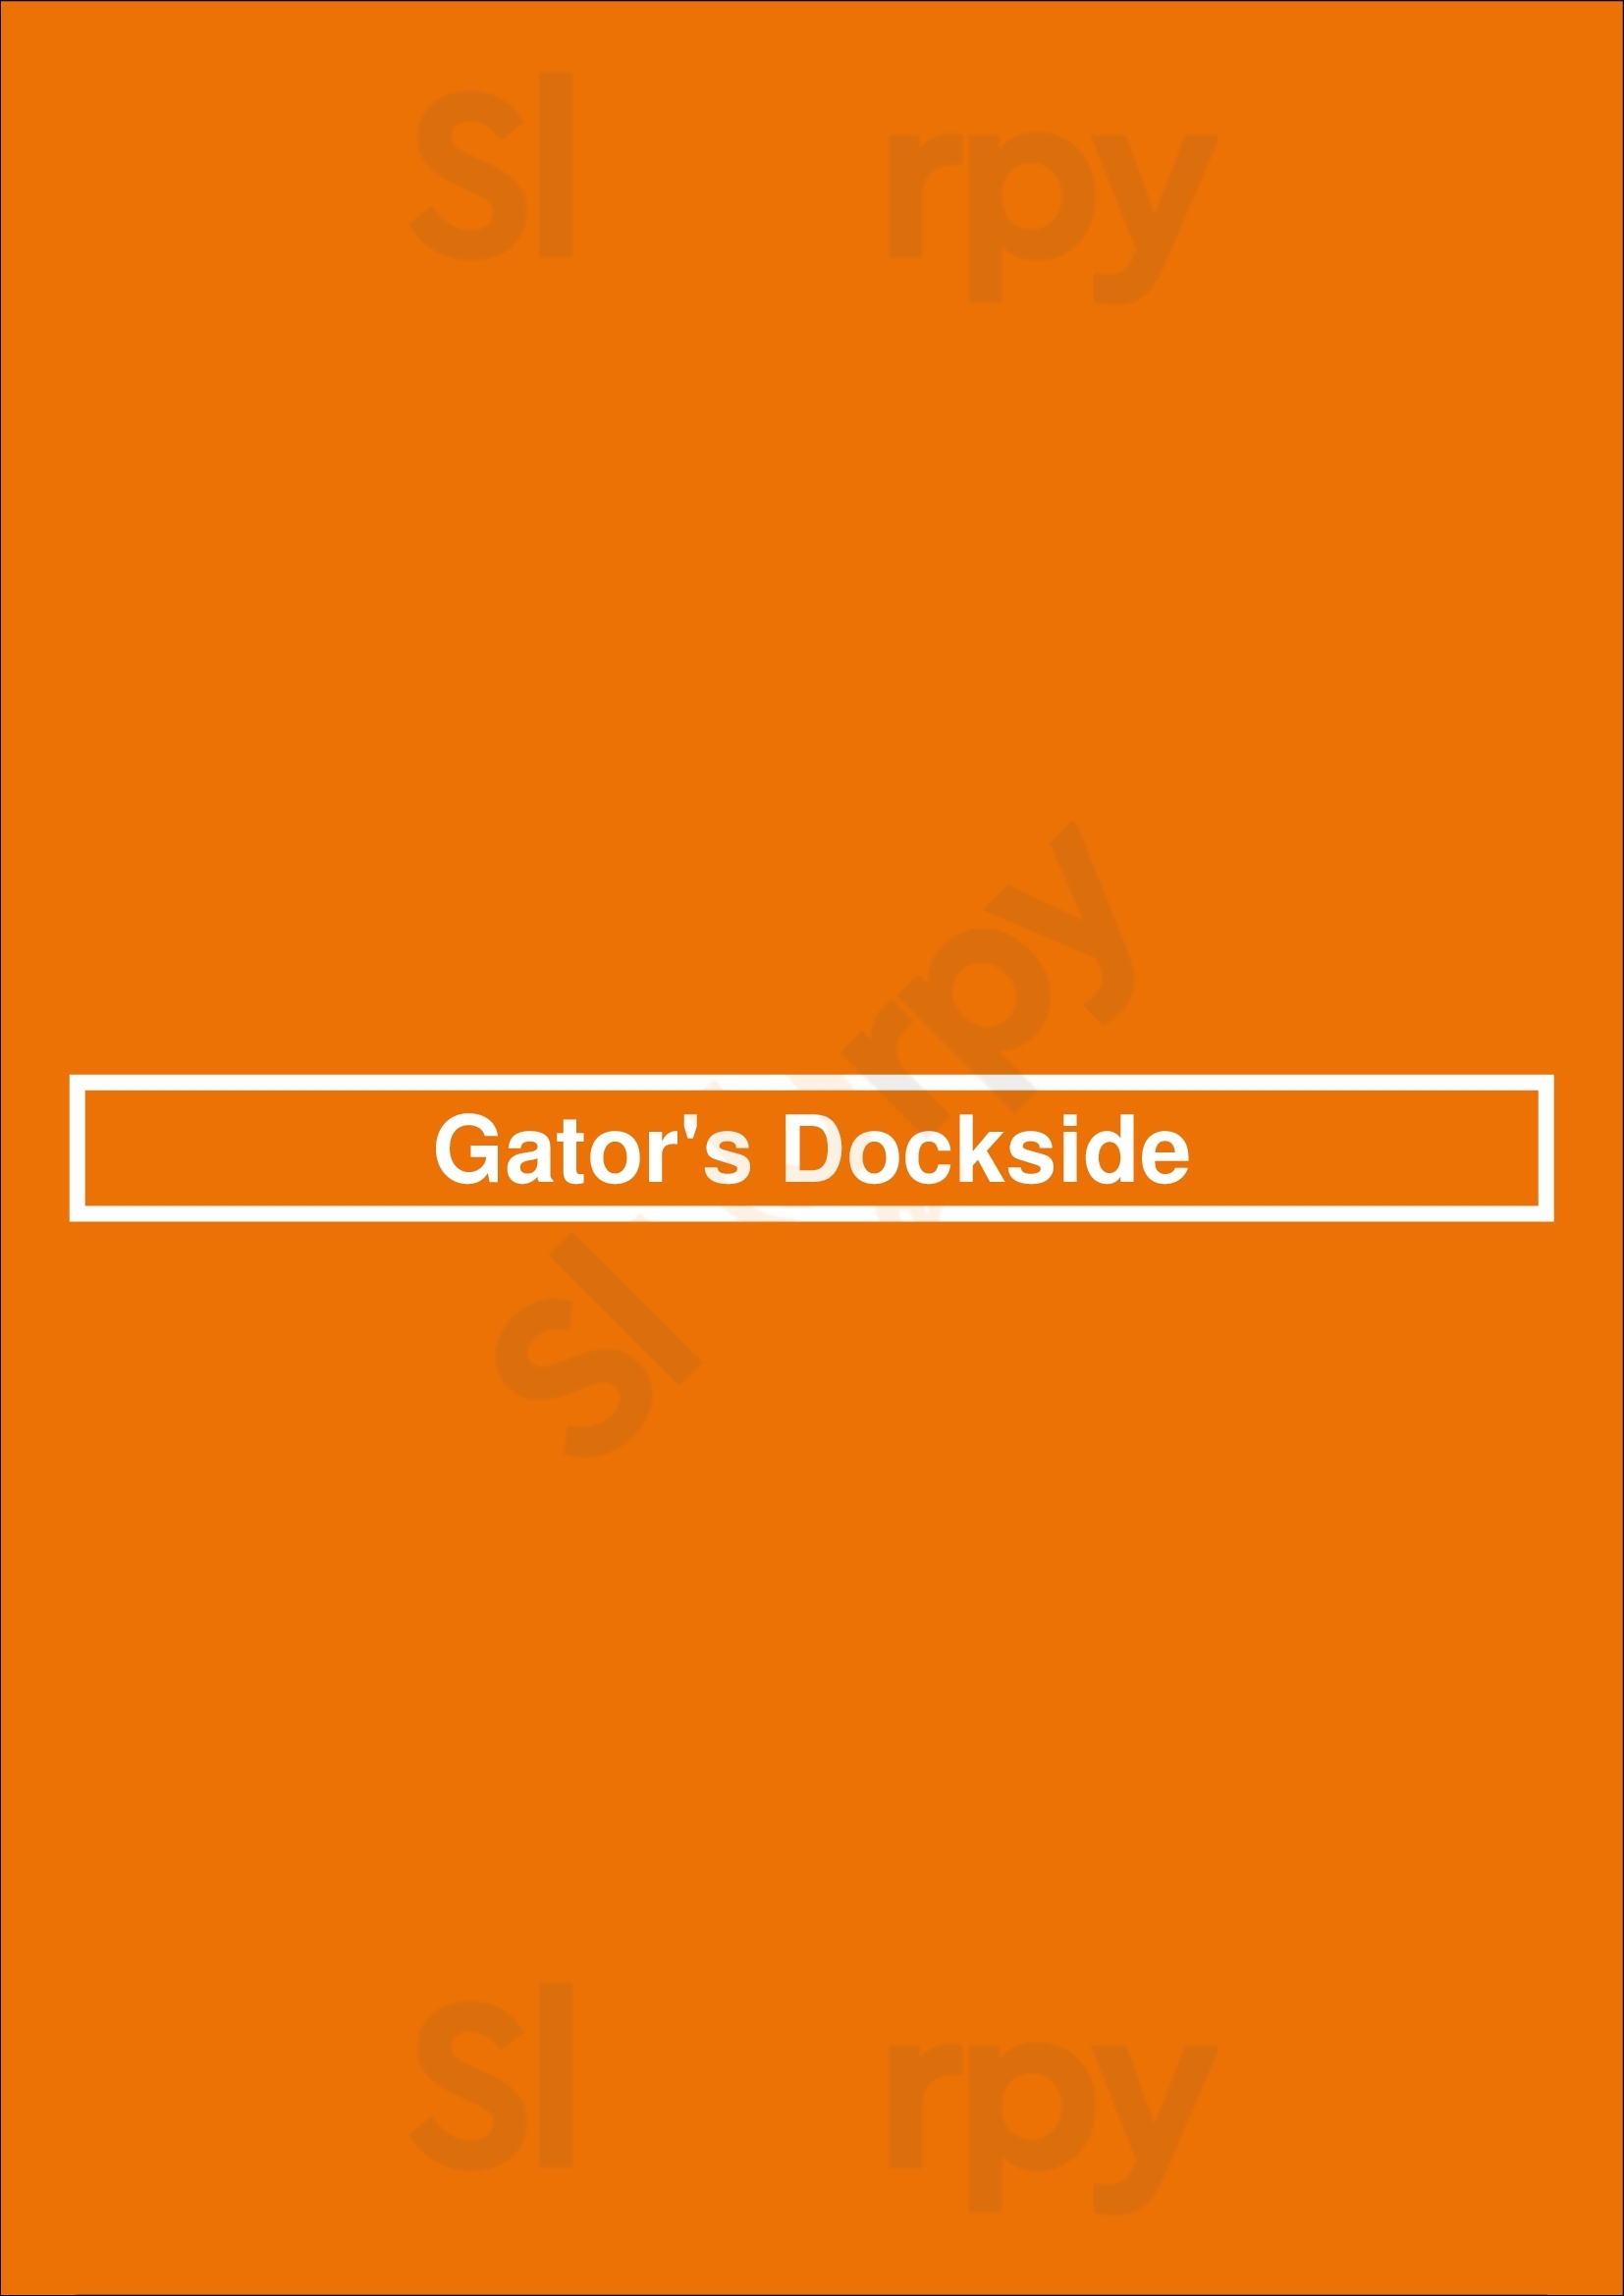 Gator's Dockside Orlando Menu - 1